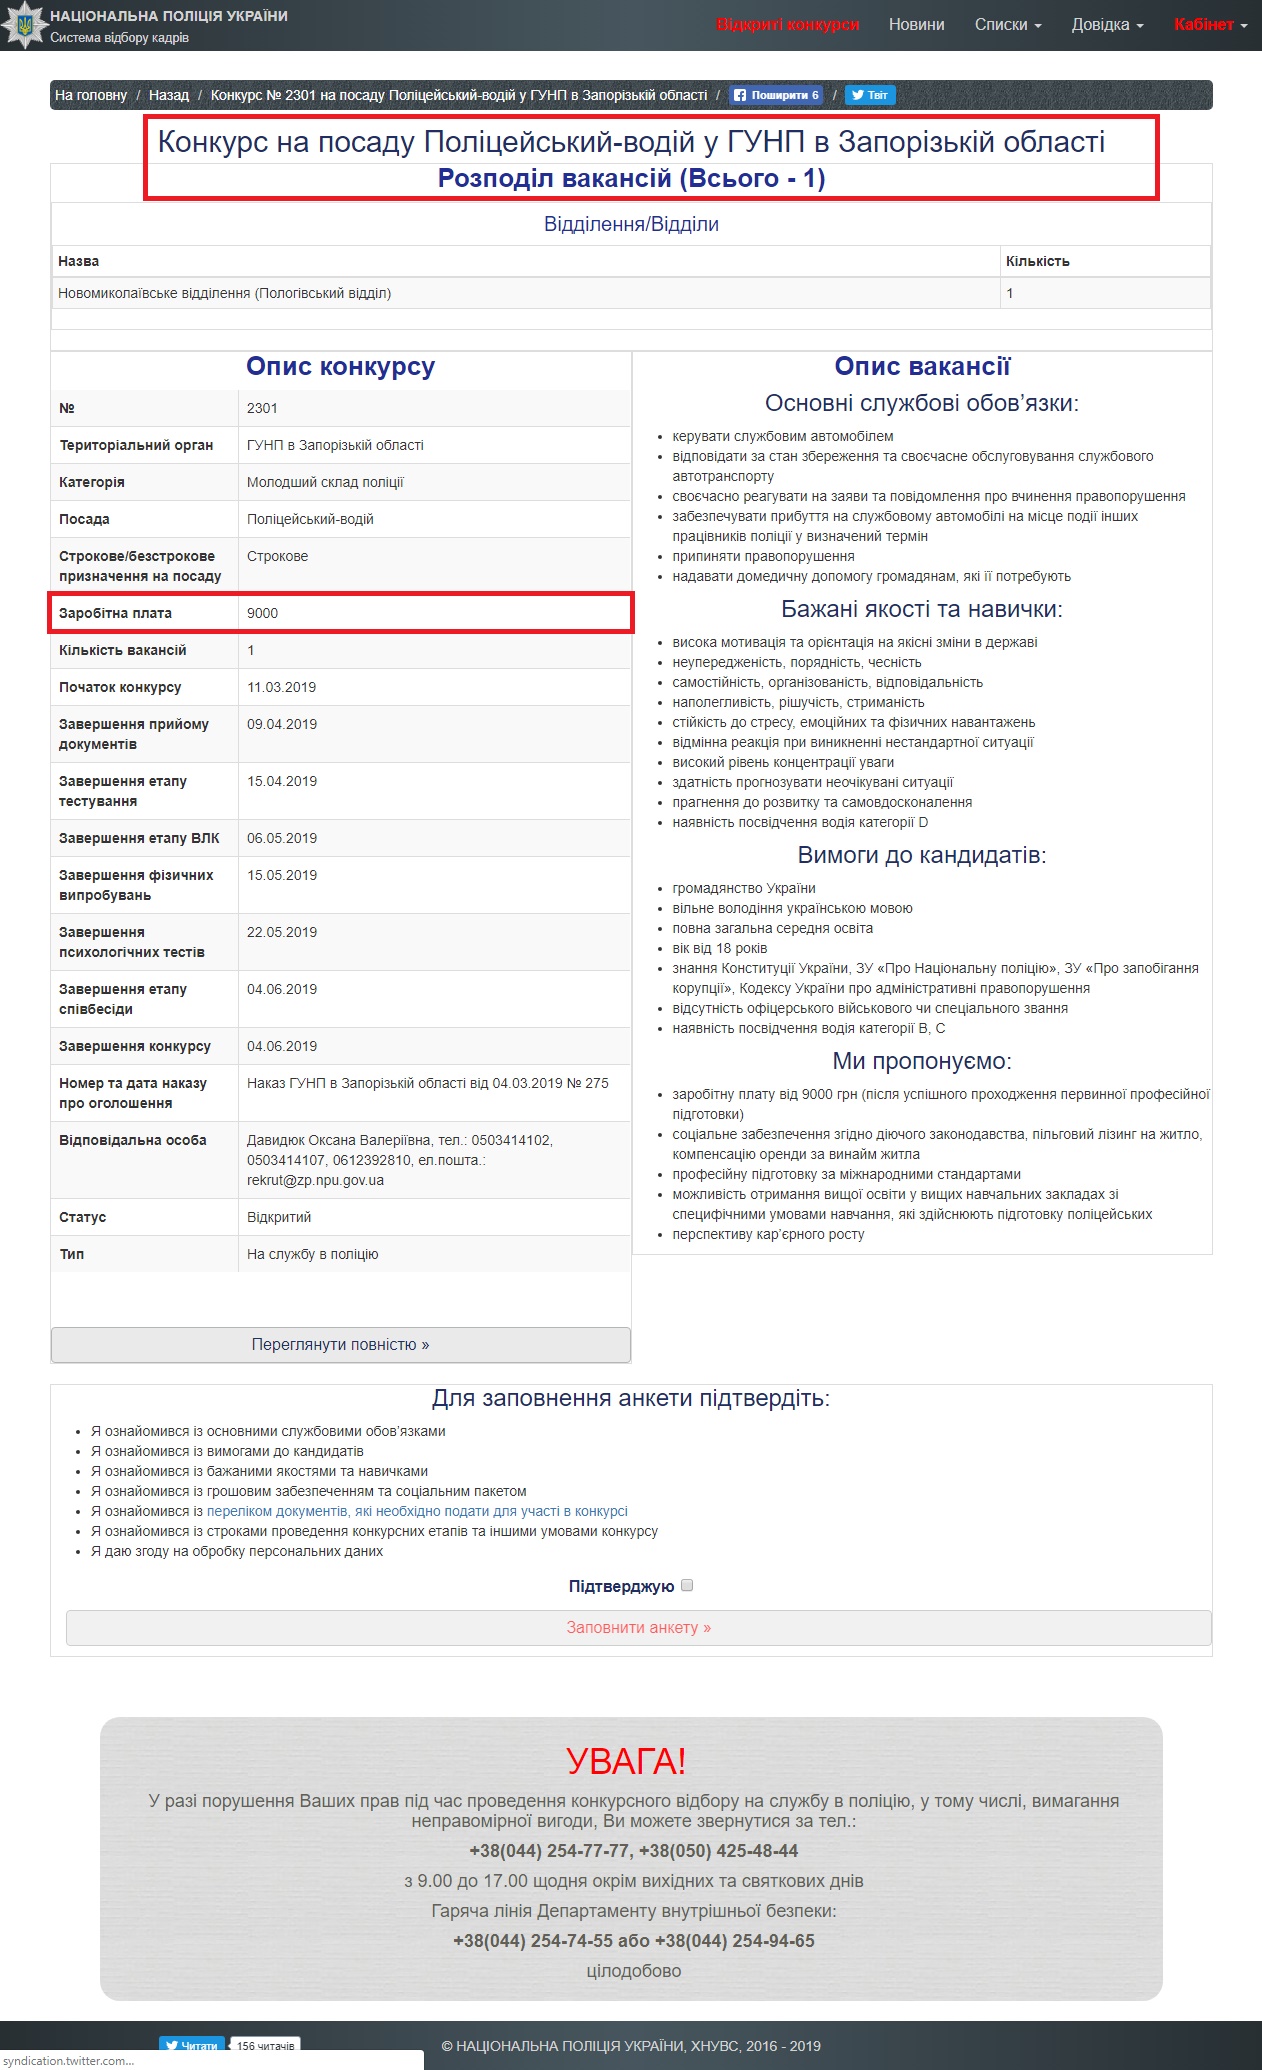 https://nabir.np.gov.ua/index.php?r=recruitment/process_recruitment&id=2301